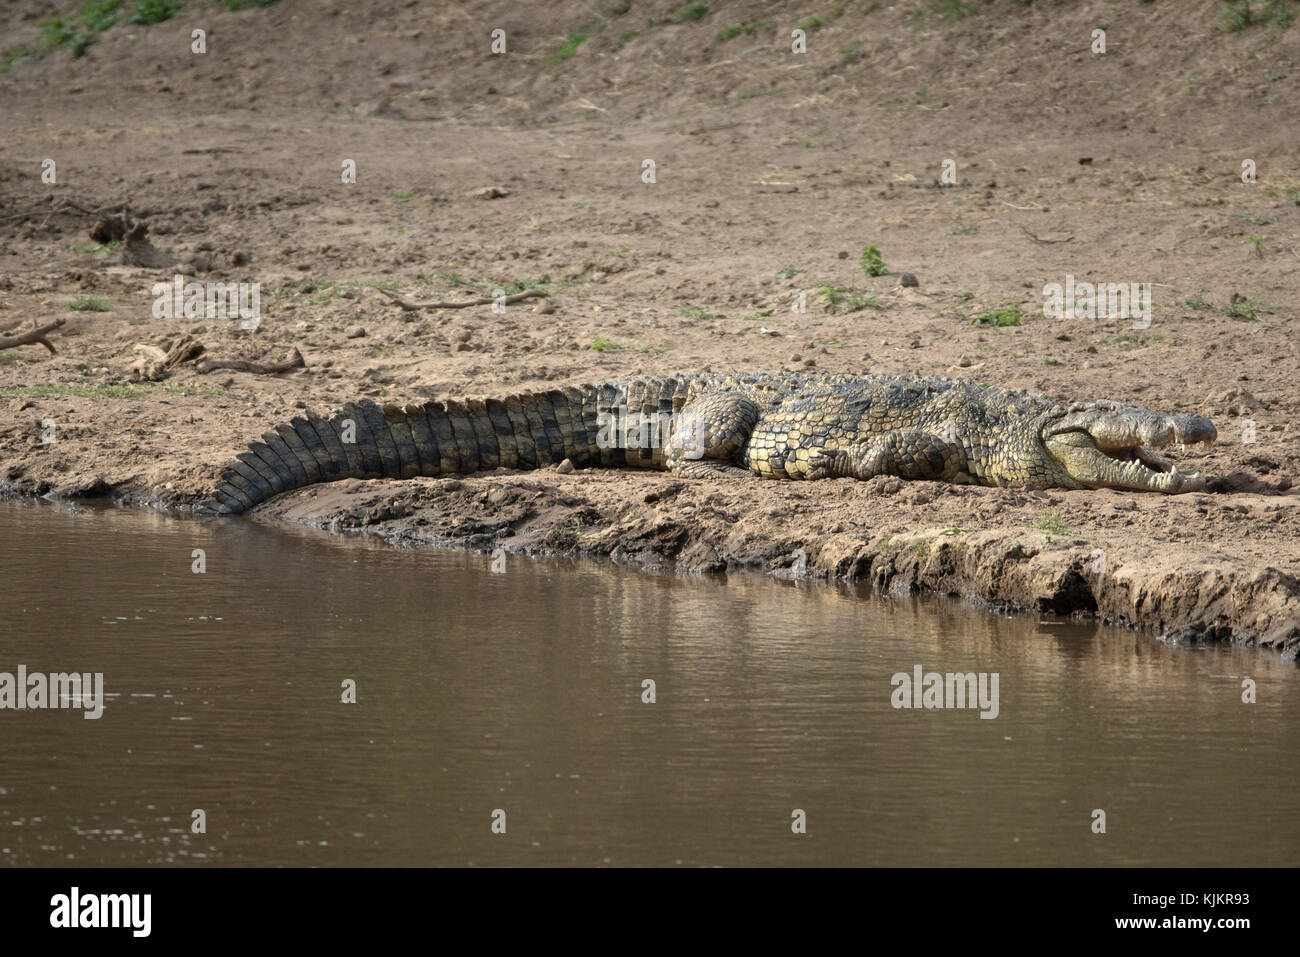 Masai Mara National Reserve.  Nile crocodile (Crocodylus niloticus) resting on a river bank.  Kenya. Stock Photo